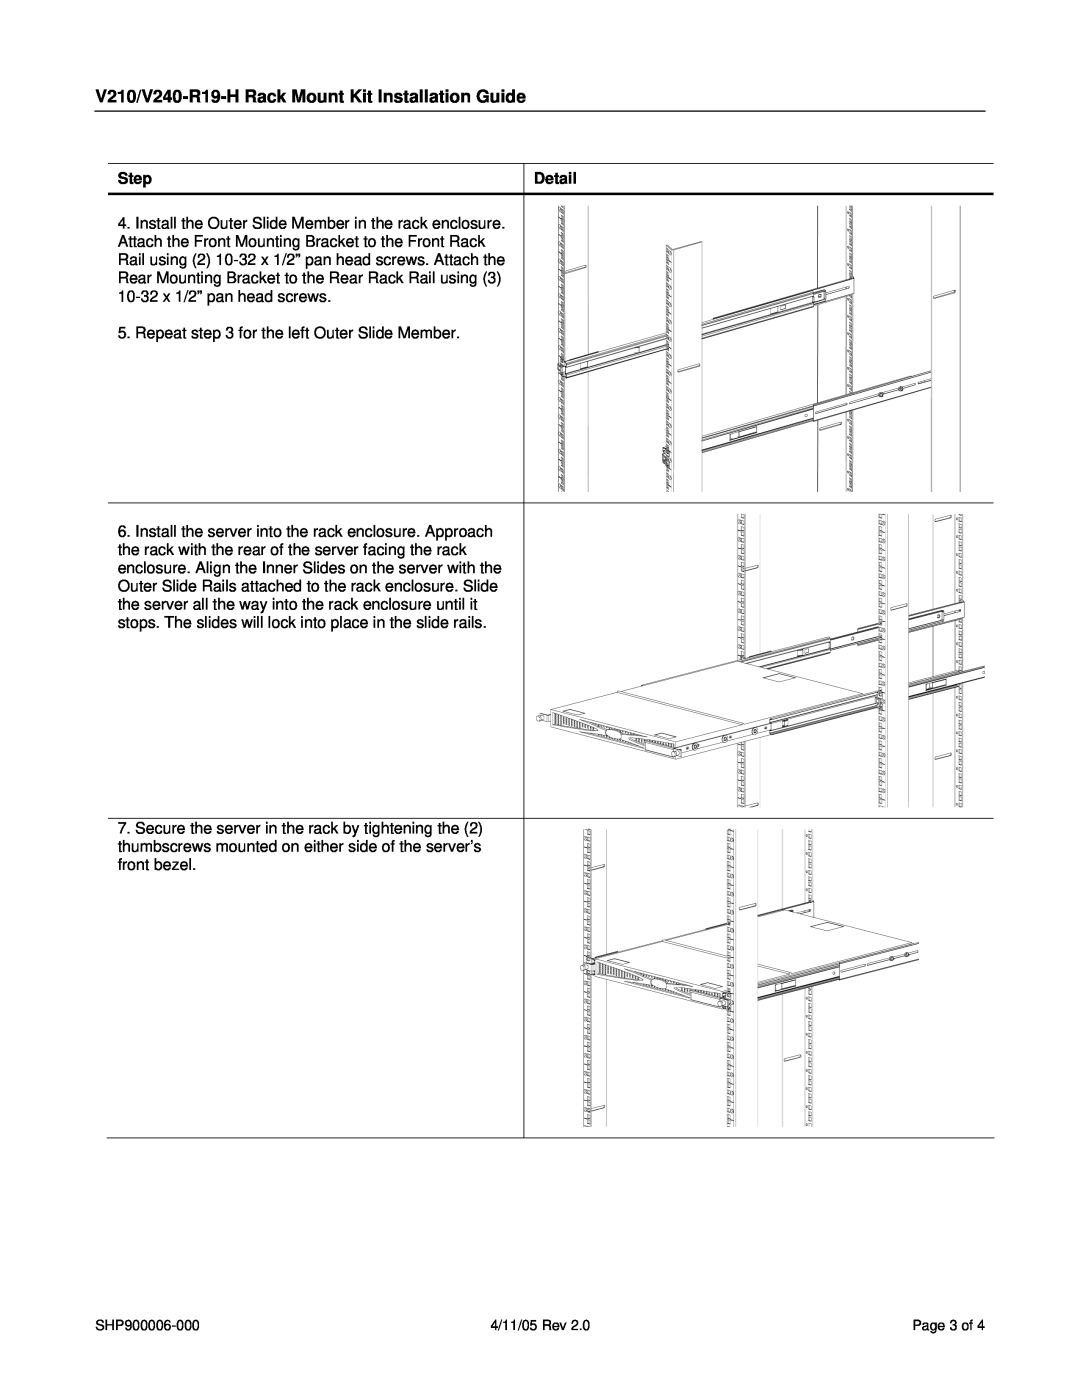 SharkRack manual V210/V240-R19-HRack Mount Kit Installation Guide, Step, Detail, Repeat for the left Outer Slide Member 